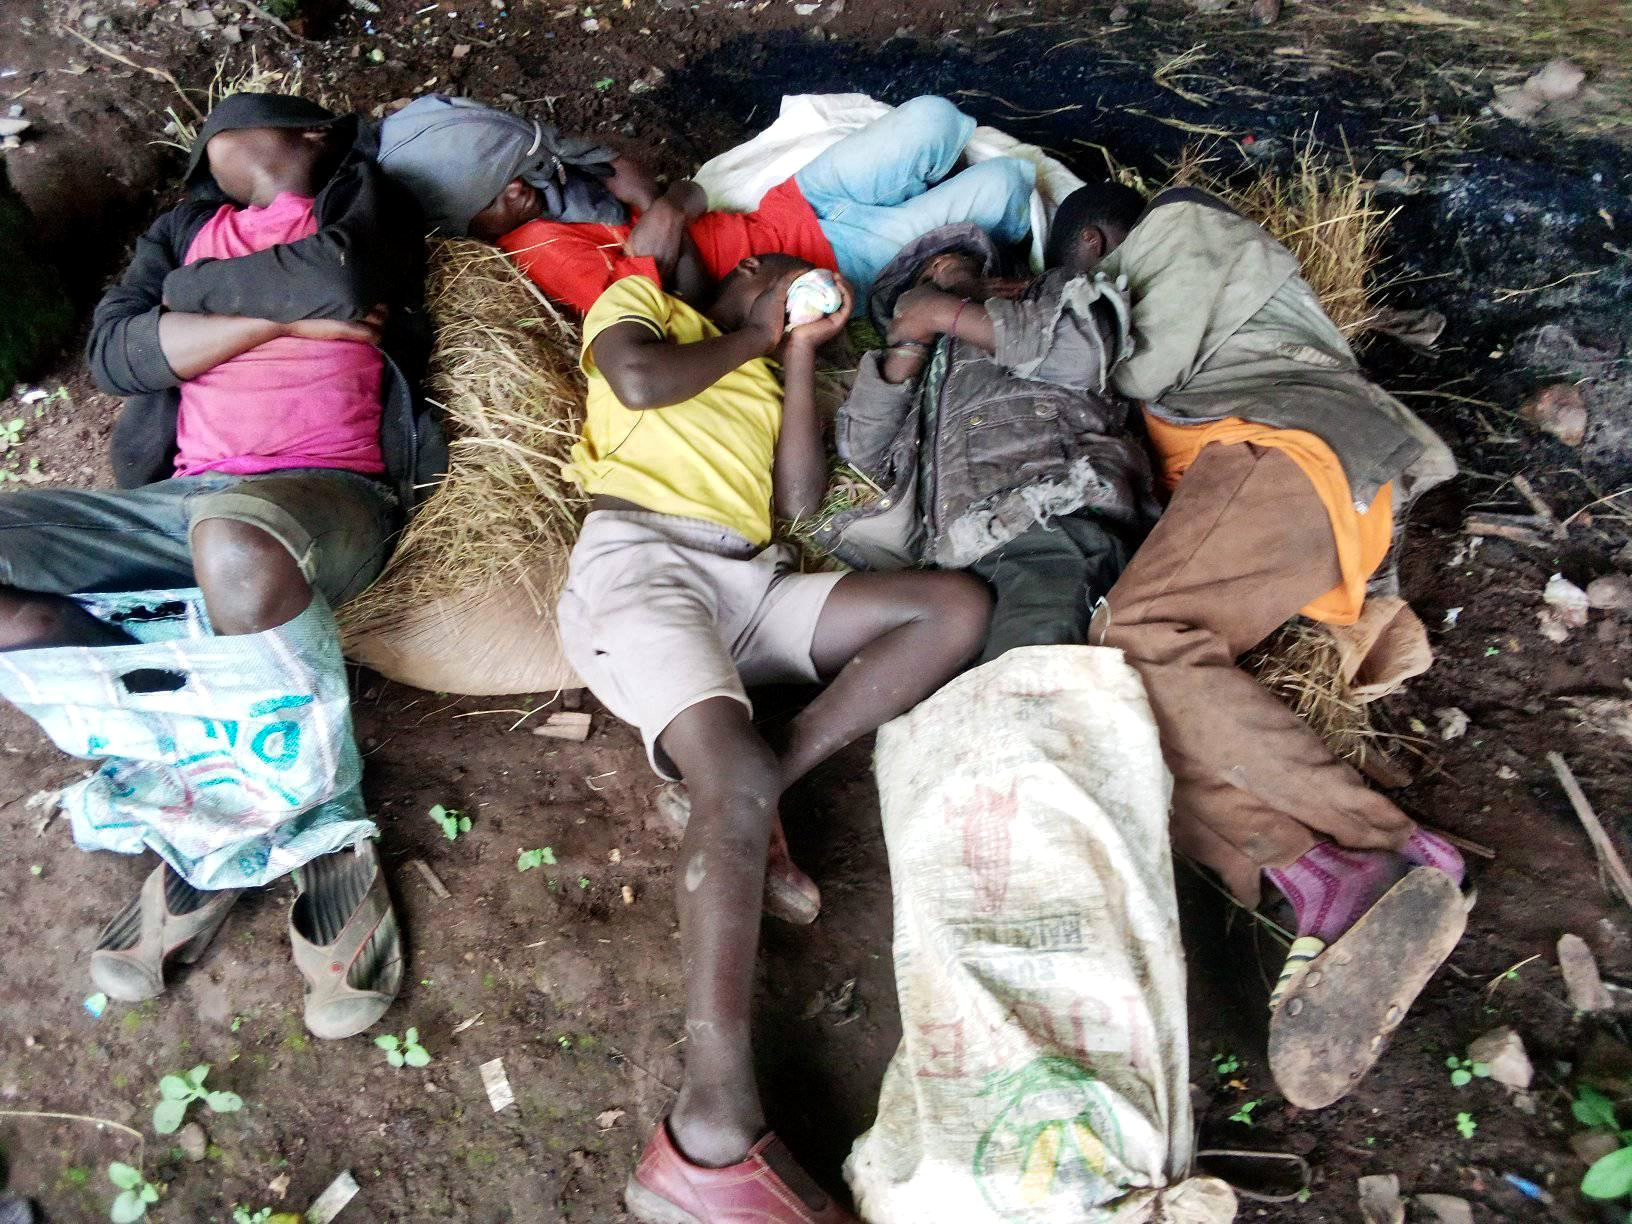 Street kids sleeping with plastic bags to keep warm